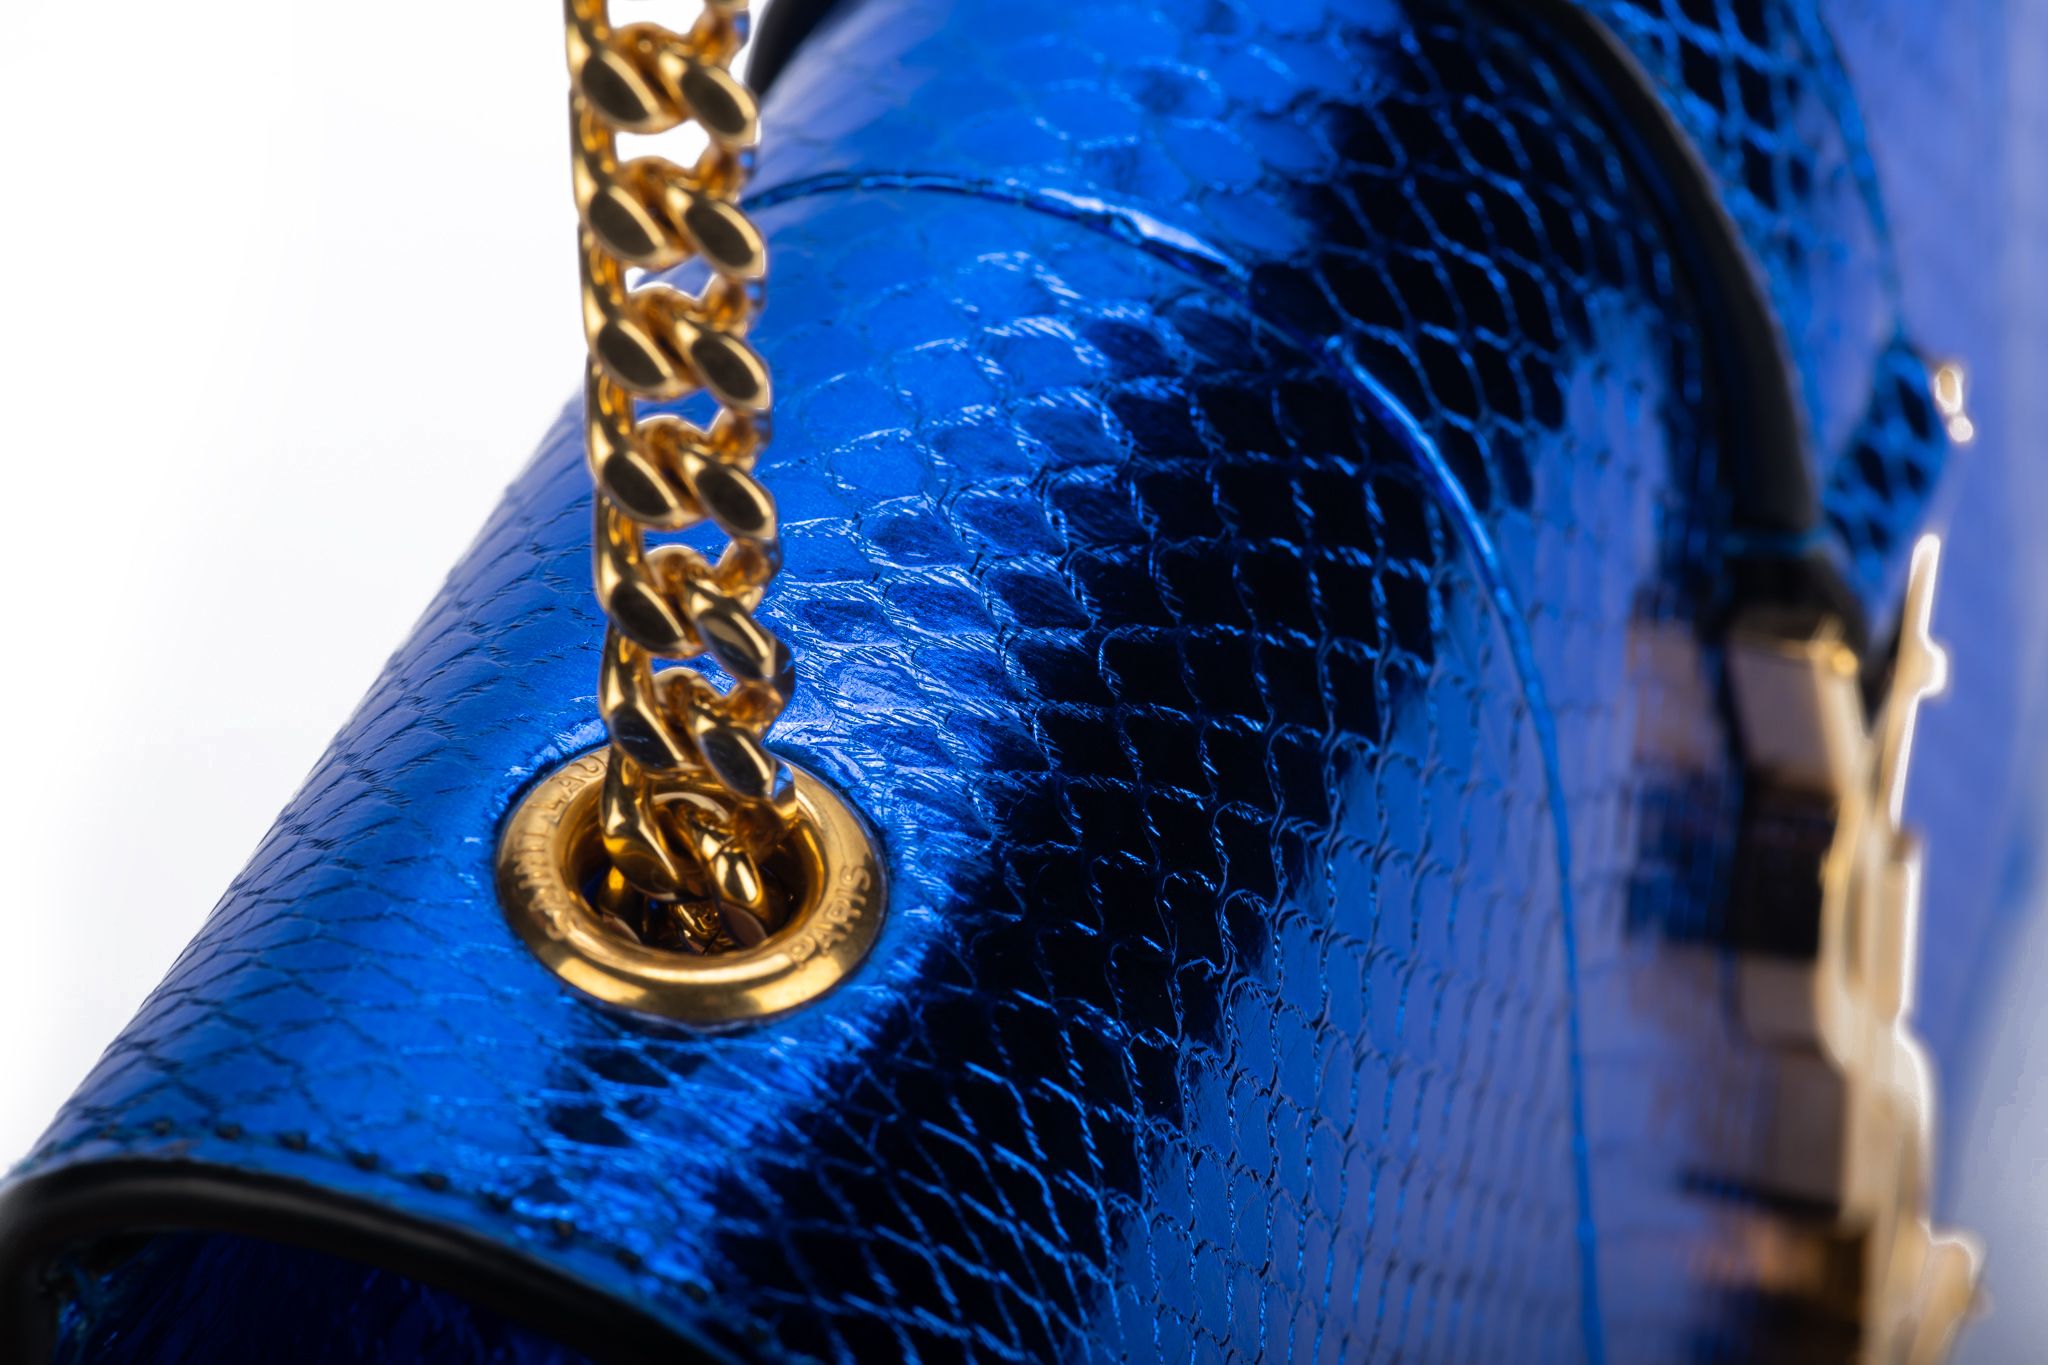 YSL New Blue Python Cross Body Bag - Vintage Lux